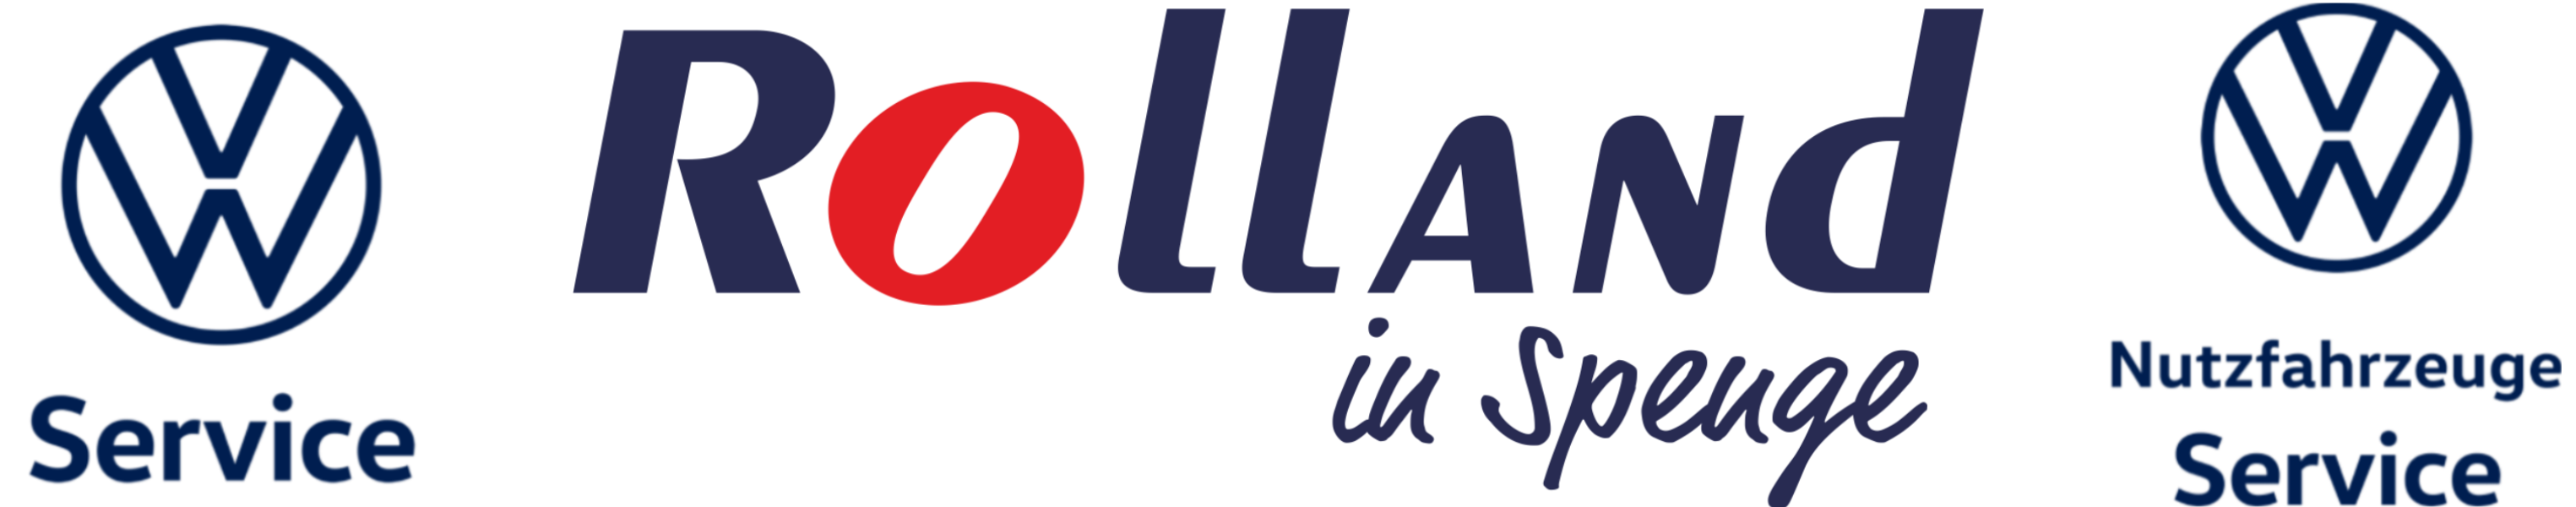 Autohaus Rolland logo